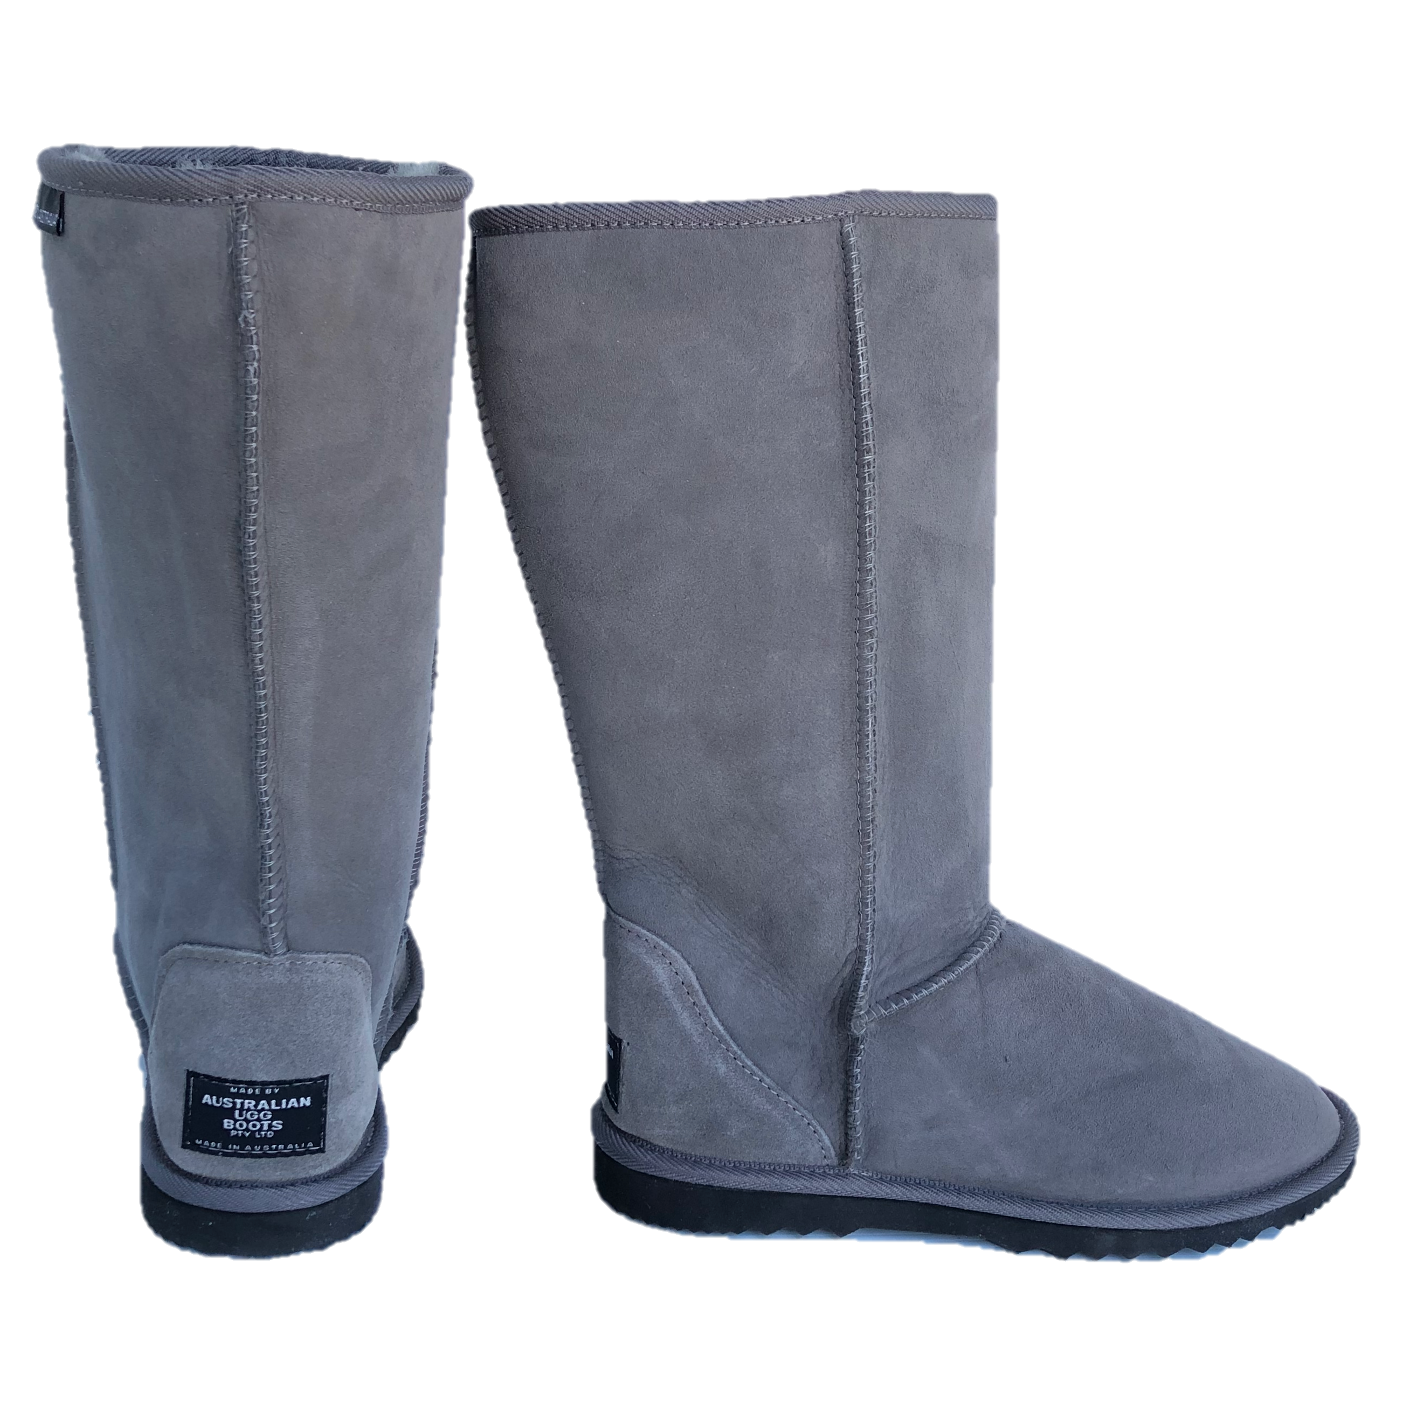 Tall grey Ugg Boots